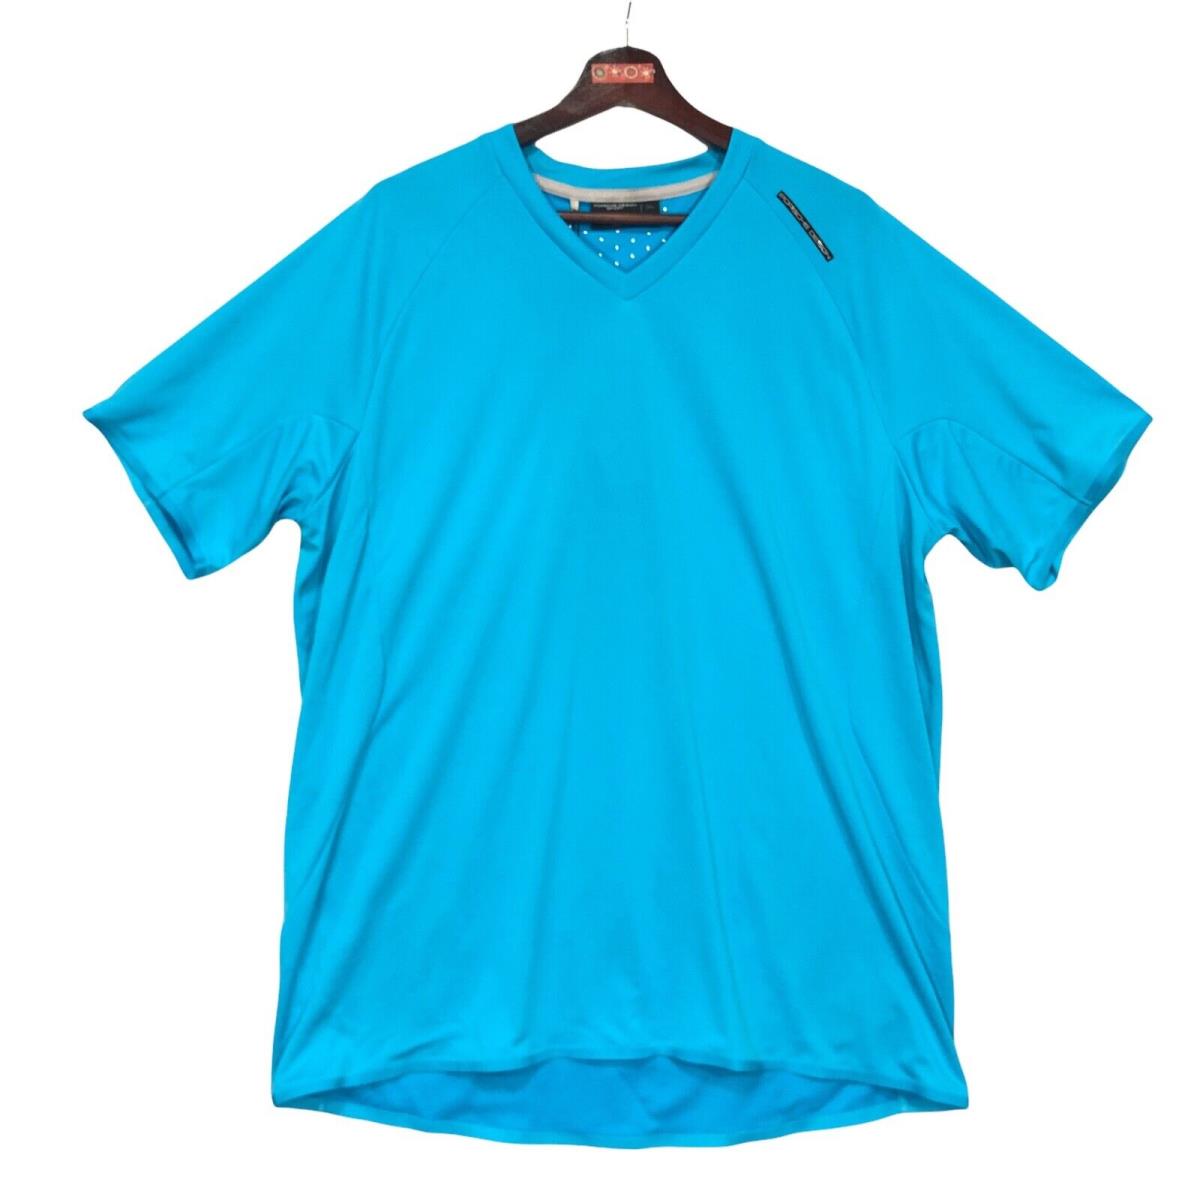 Porsche Design Sport Mens Size XL Bright Blue T-shirt Adidas Climachill Rare